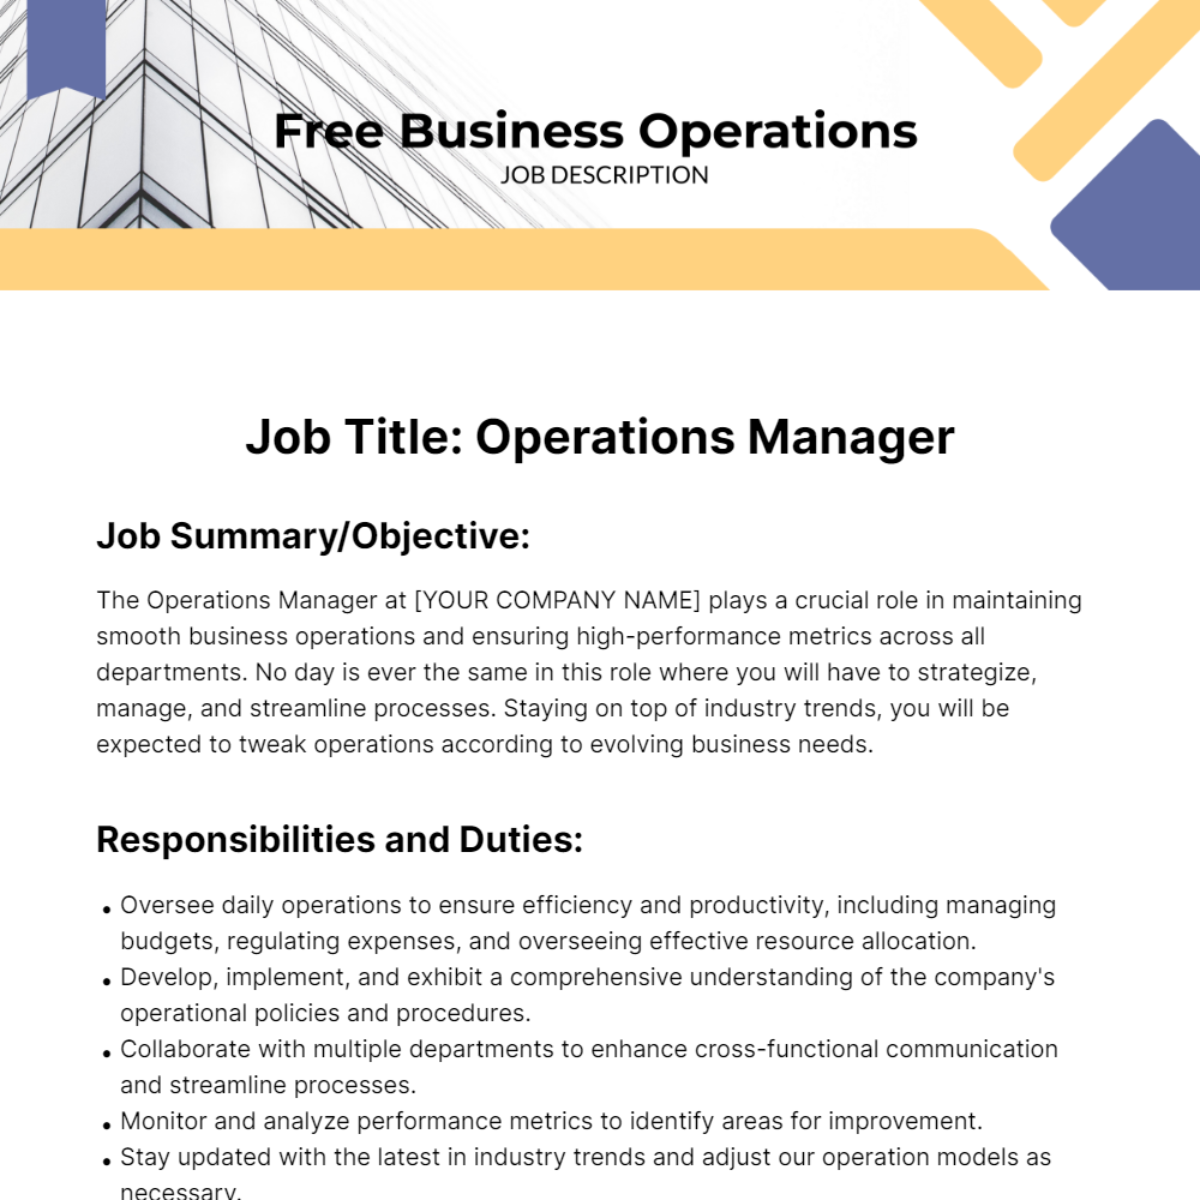 Free Business Operations Job Description Template